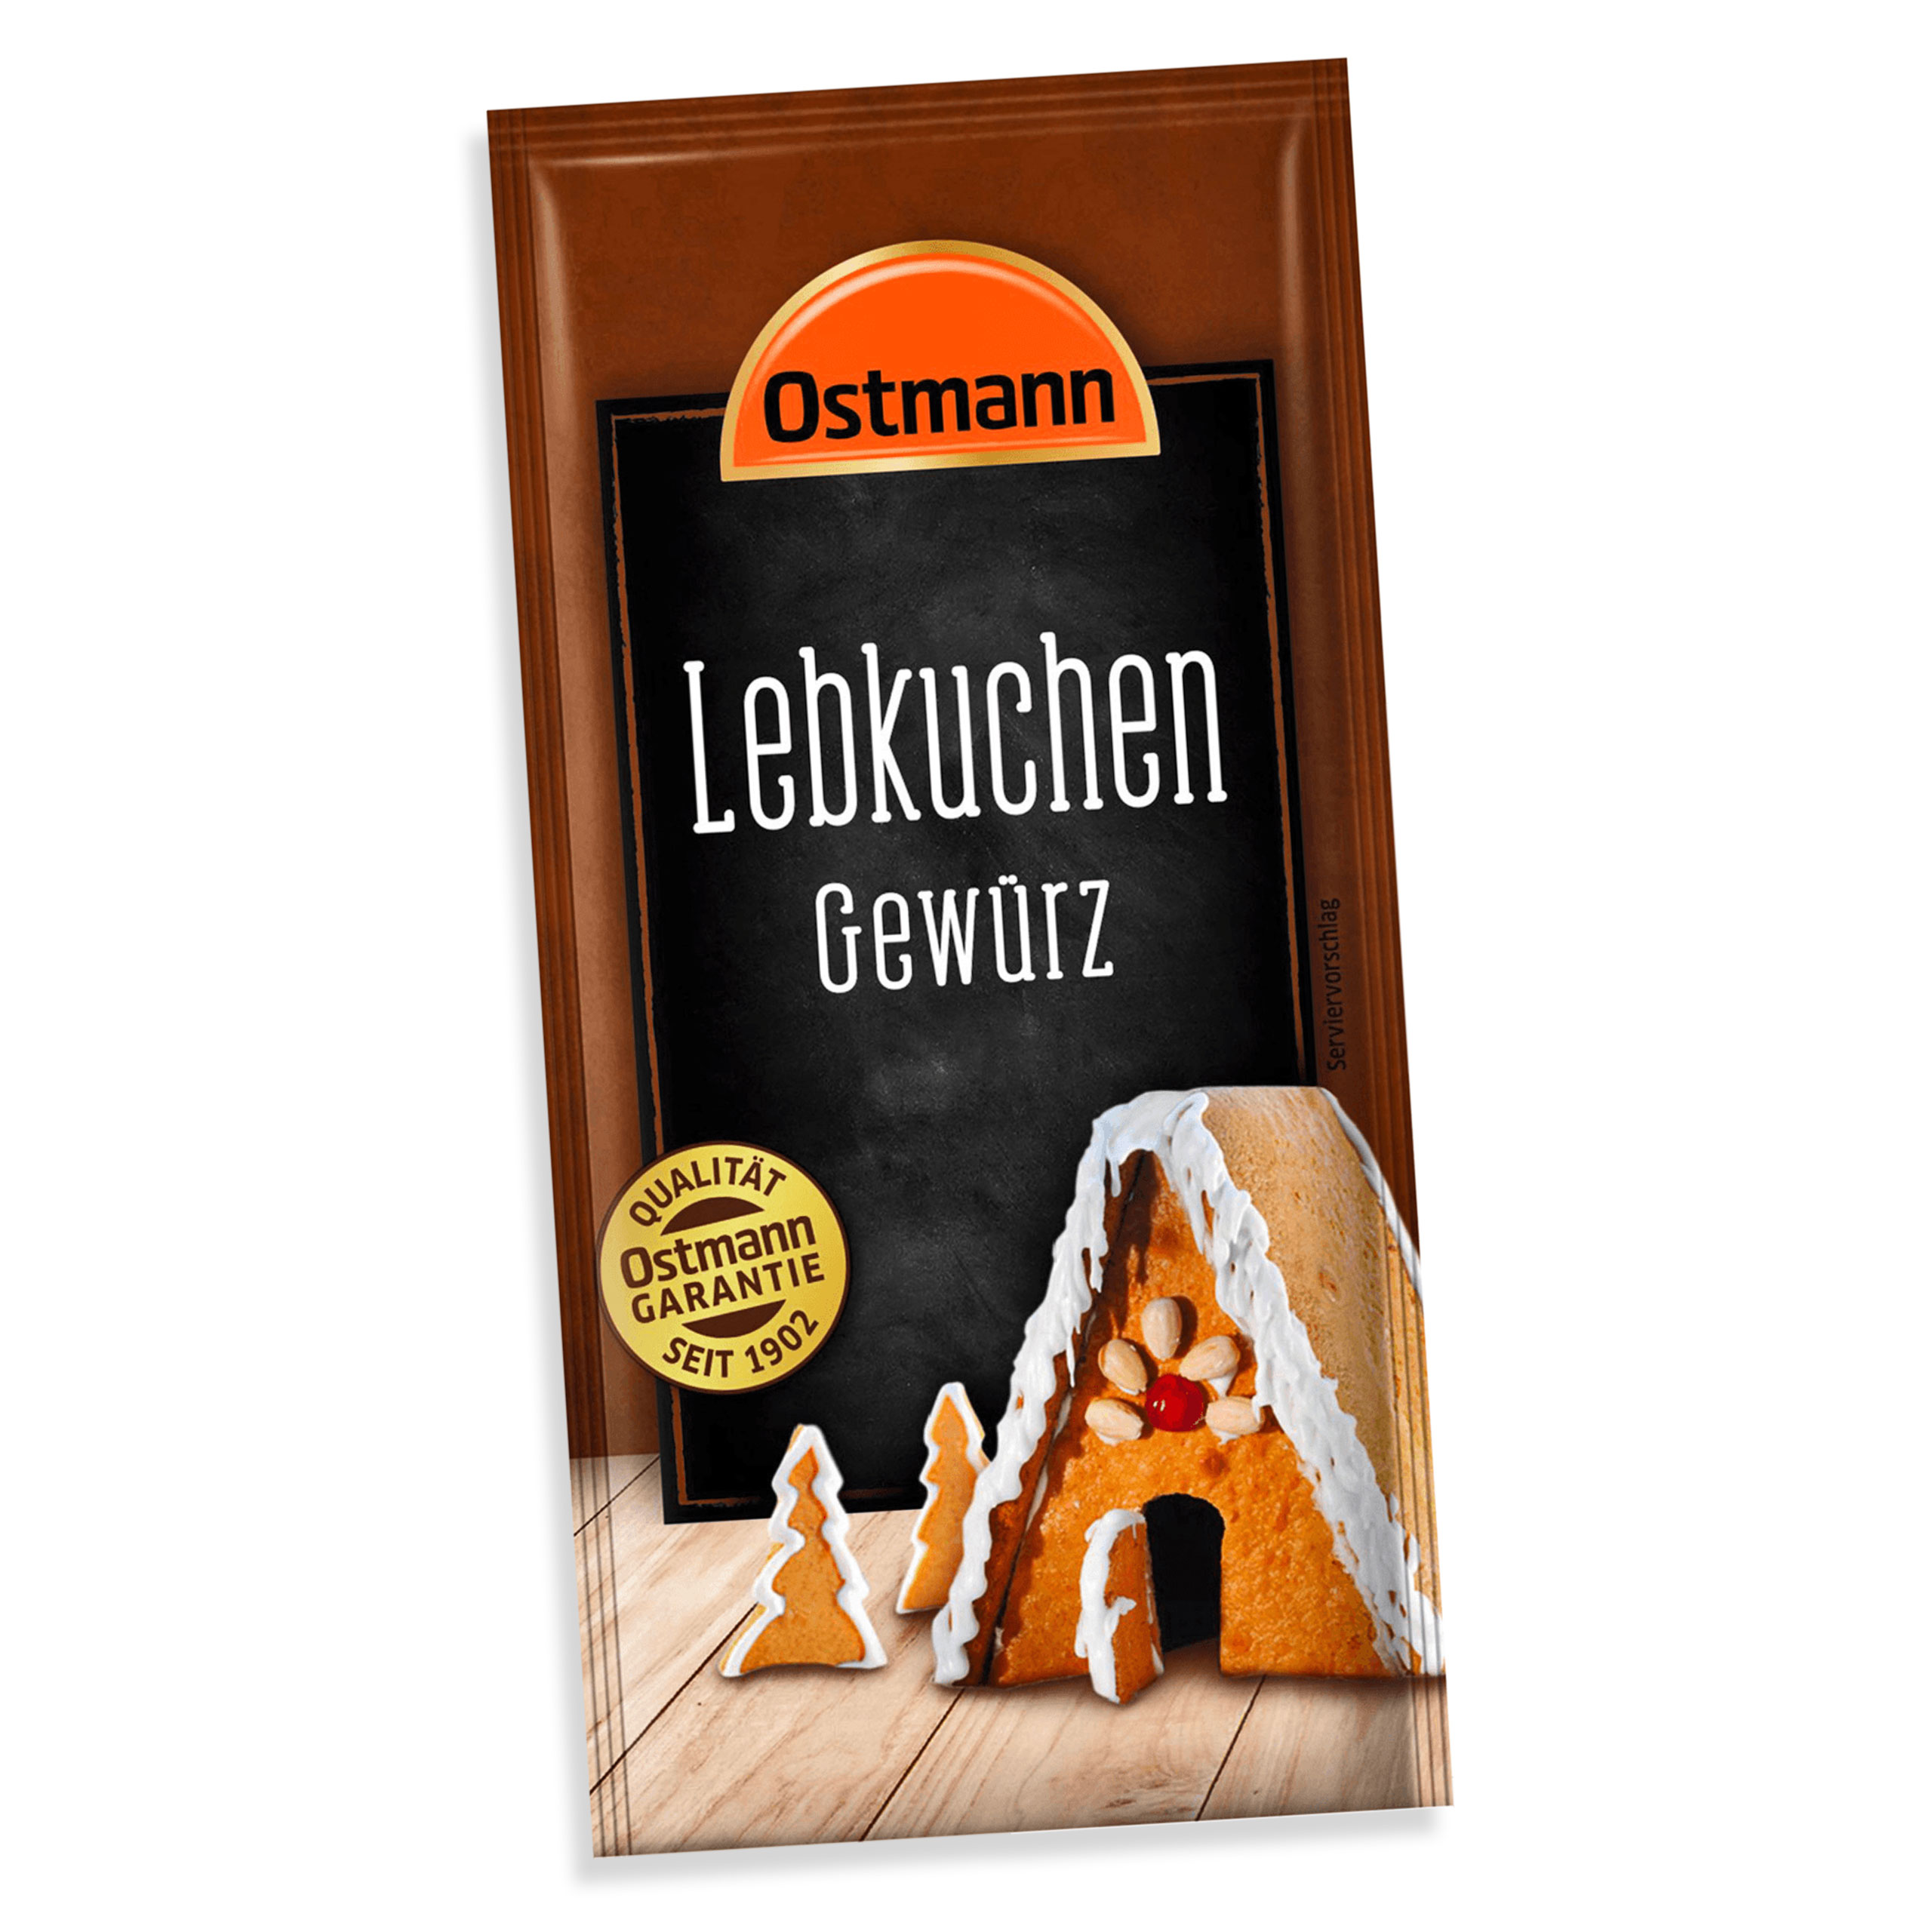 Ostmann Lebkuchen Gewürz 15g - Original Artikel günstig bestellen